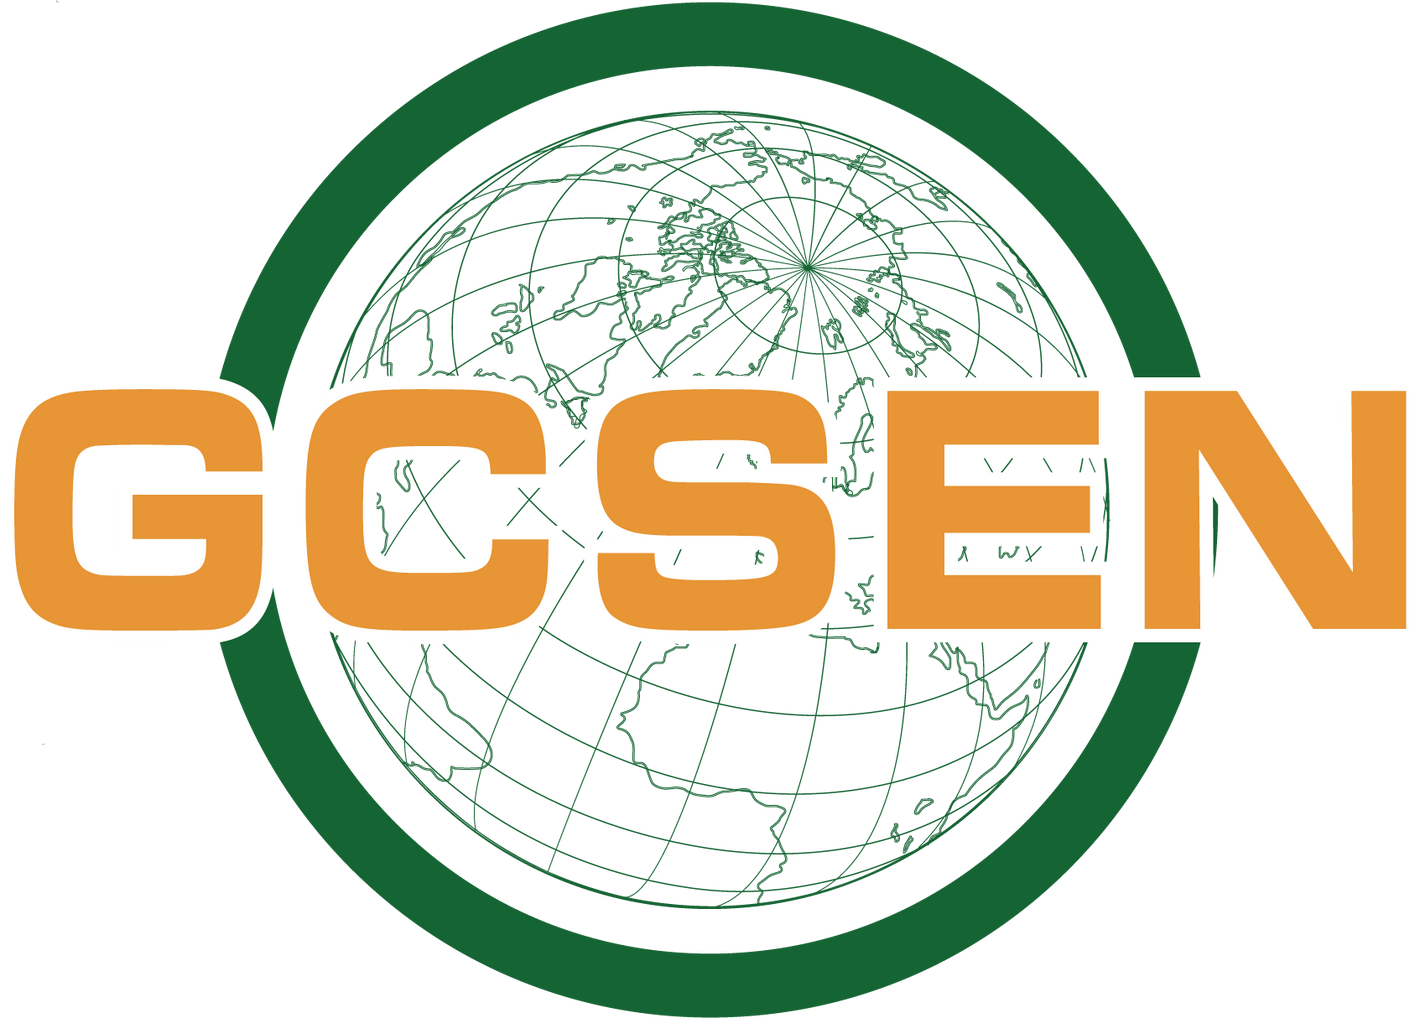 GCSEN logo with globe outline